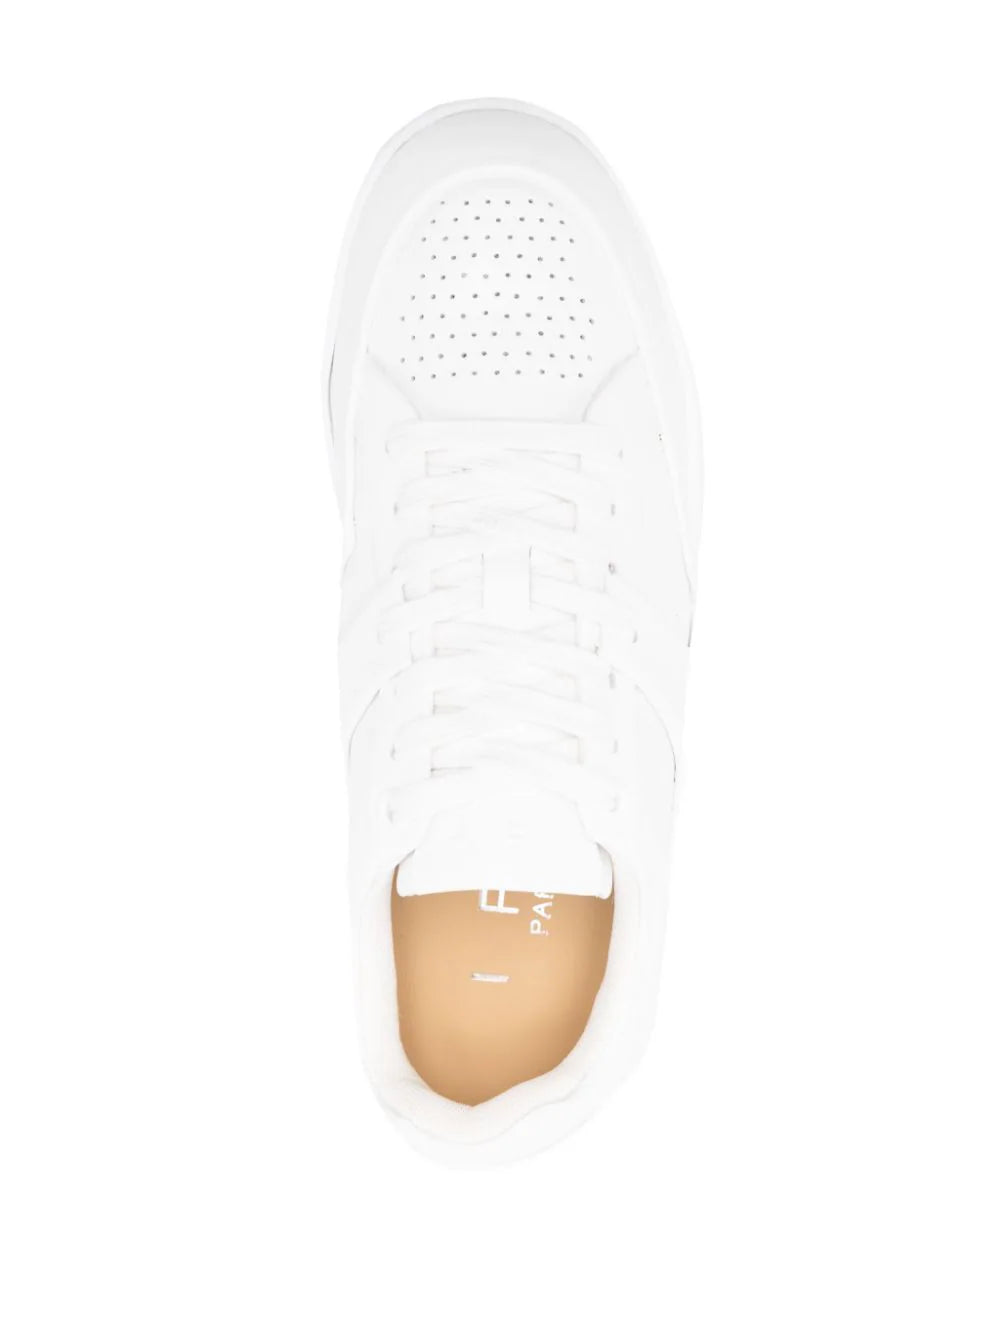 Alex sneakers, white